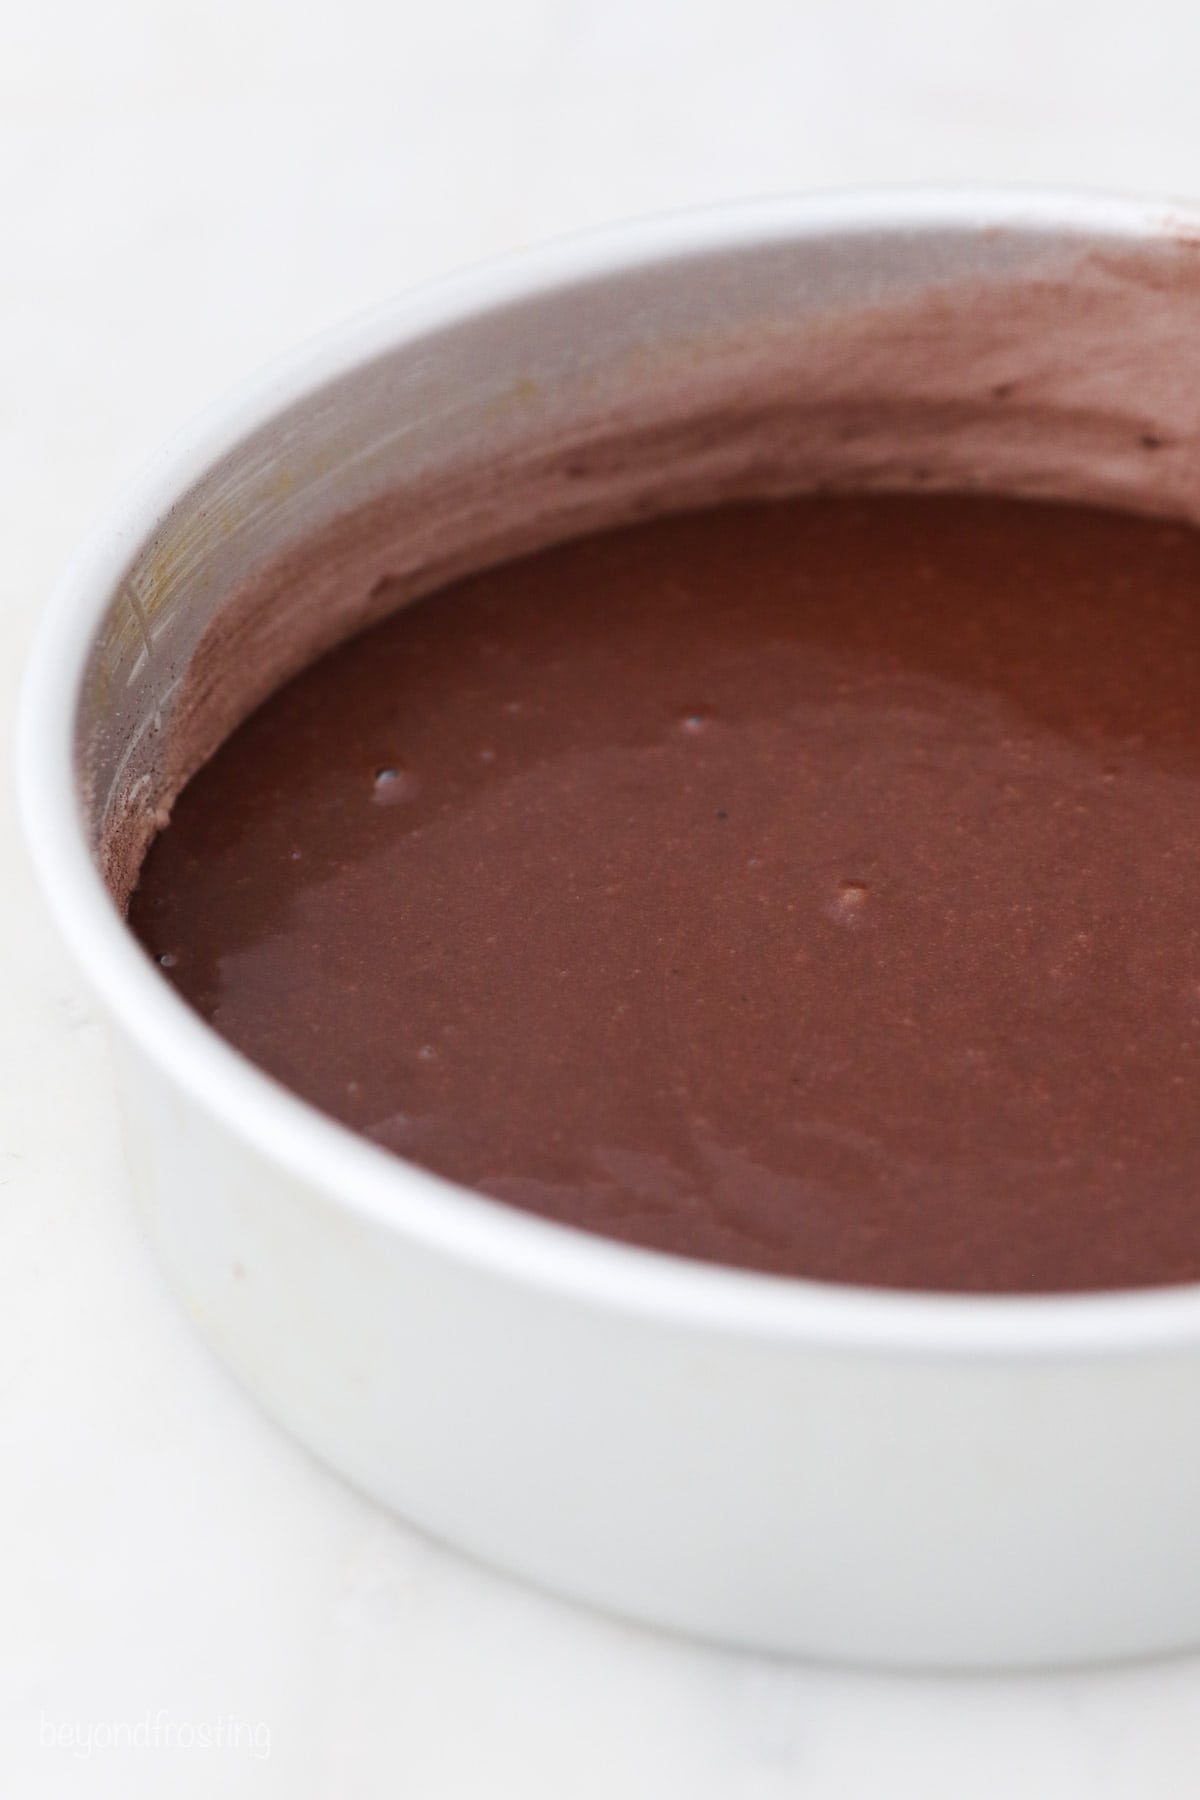 Close up of chocolate cake batter in a metal cake pan.